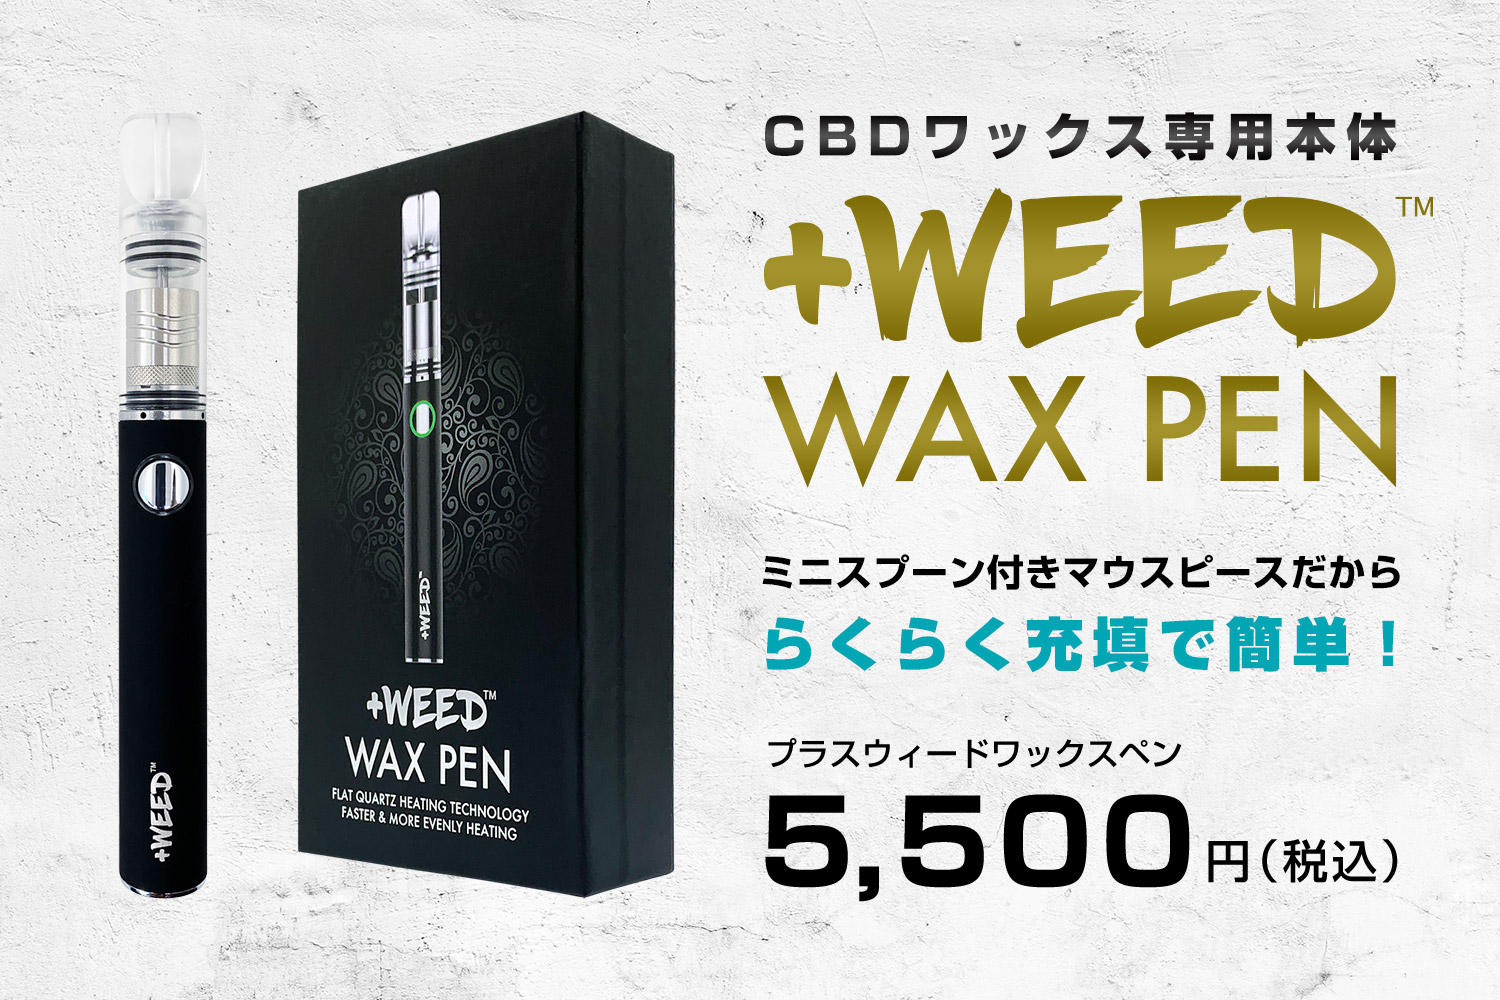 CBDワックス専用本体+WEED WAX PEN通販